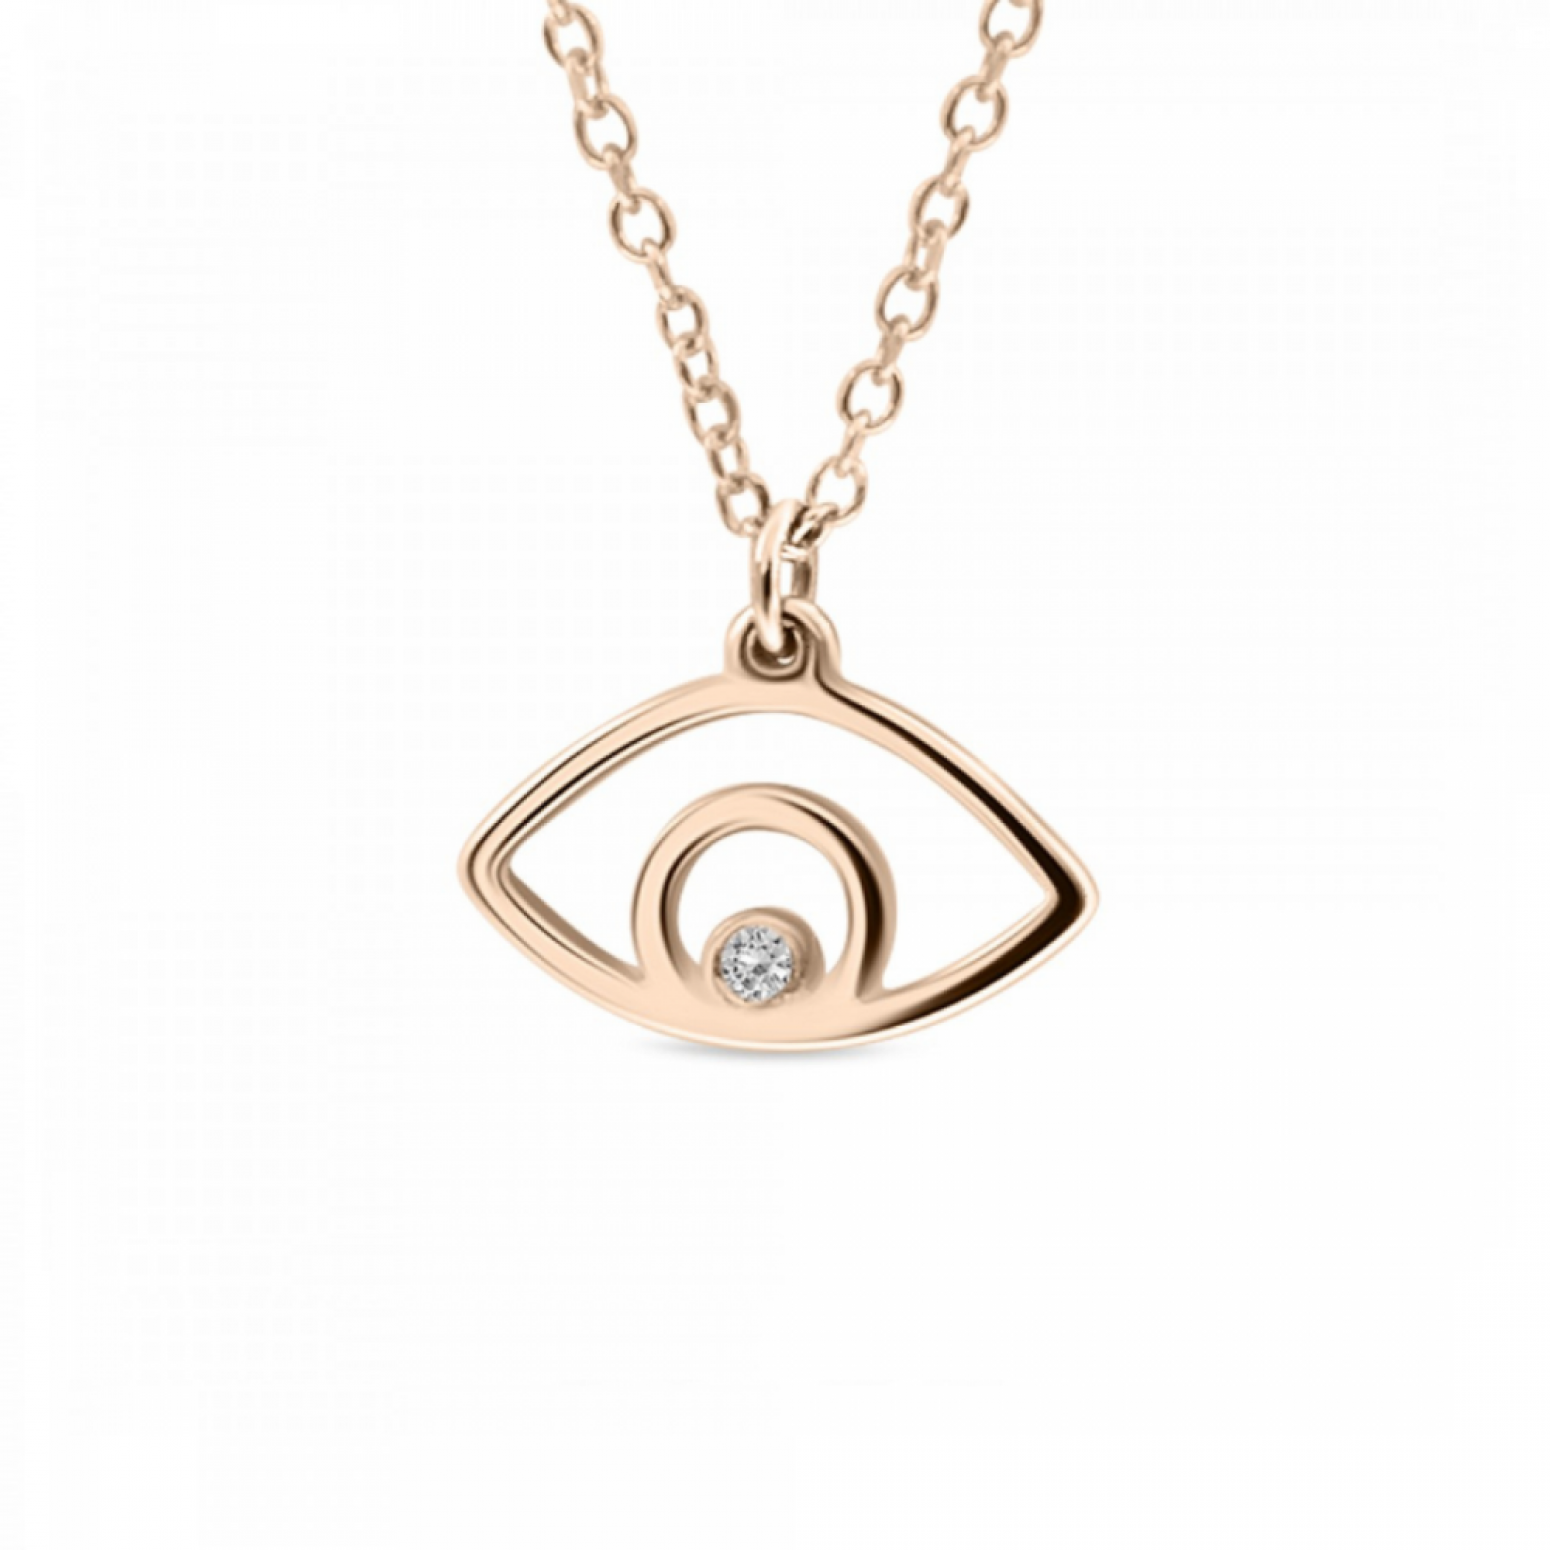 Eye necklace, Κ14 pink gold with diamond 0.01ct, VS2, H ko4501 NECKLACES Κοσμηματα - chrilia.gr